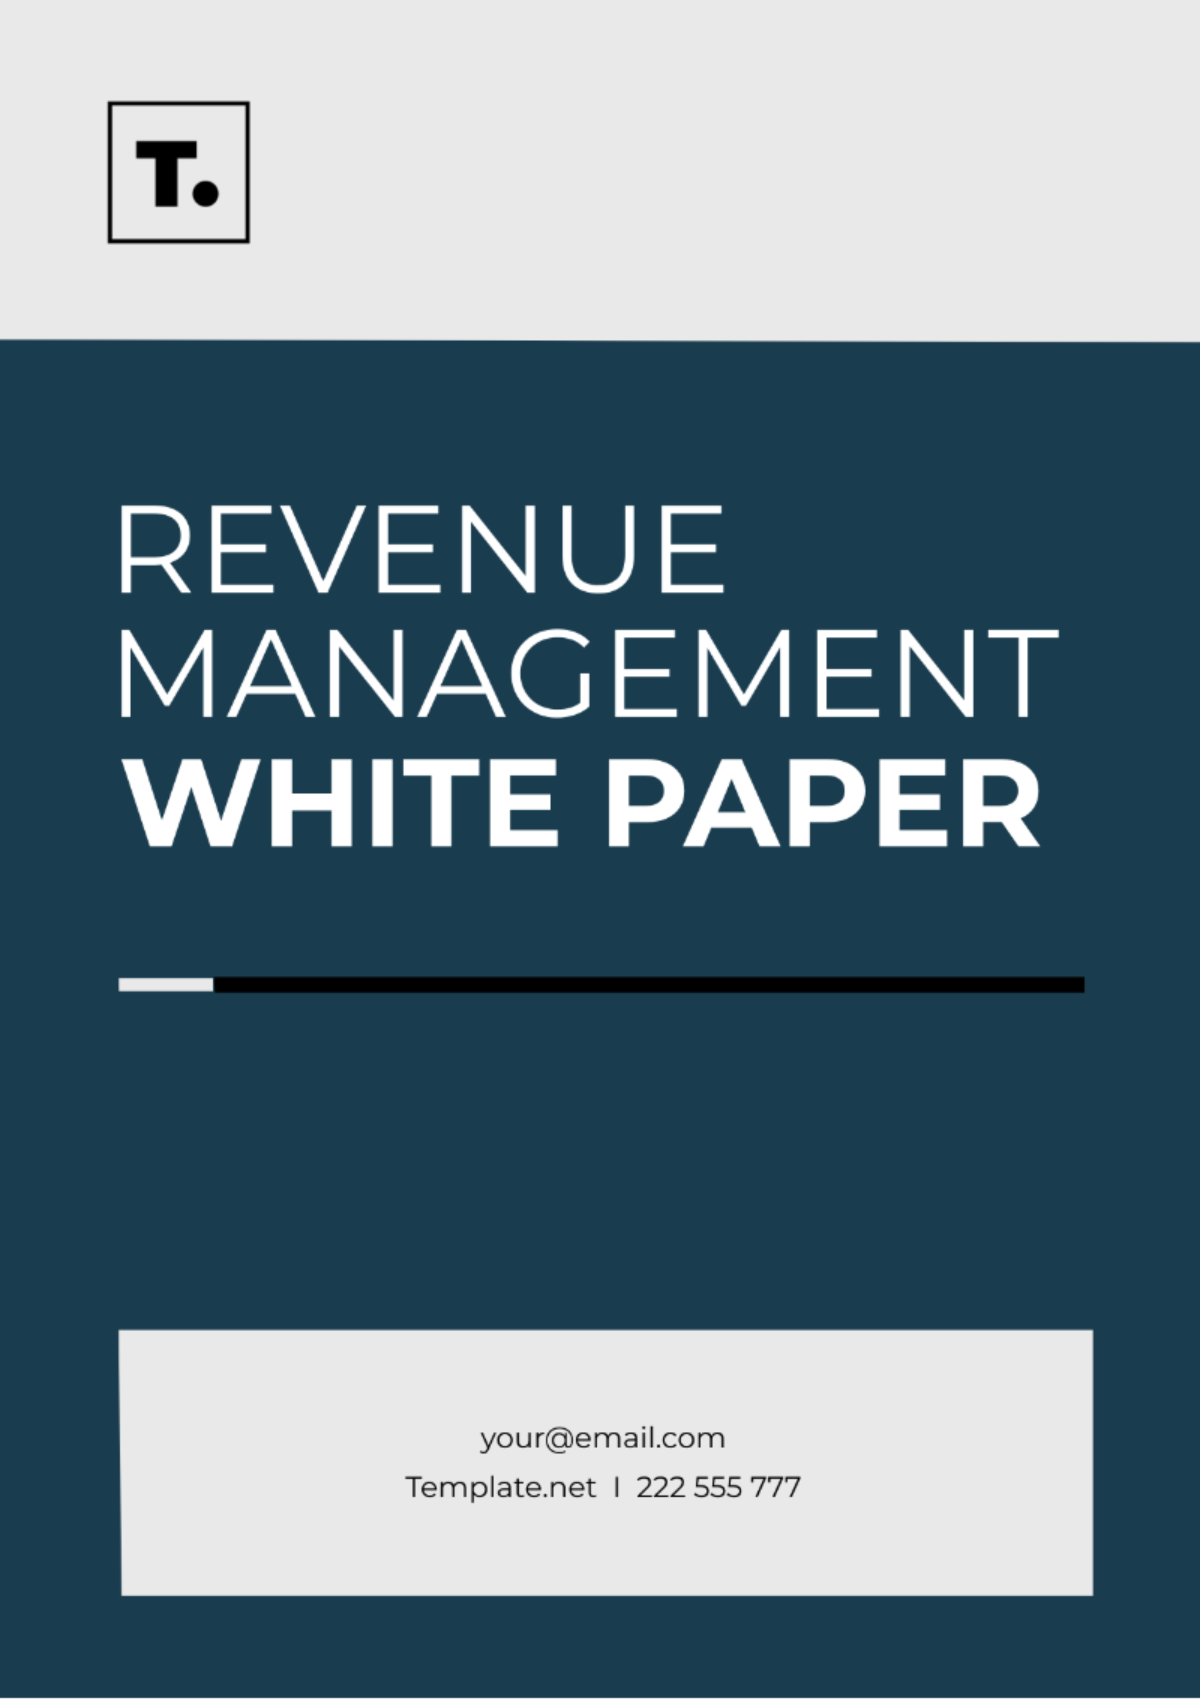 Revenue Management White Paper Template